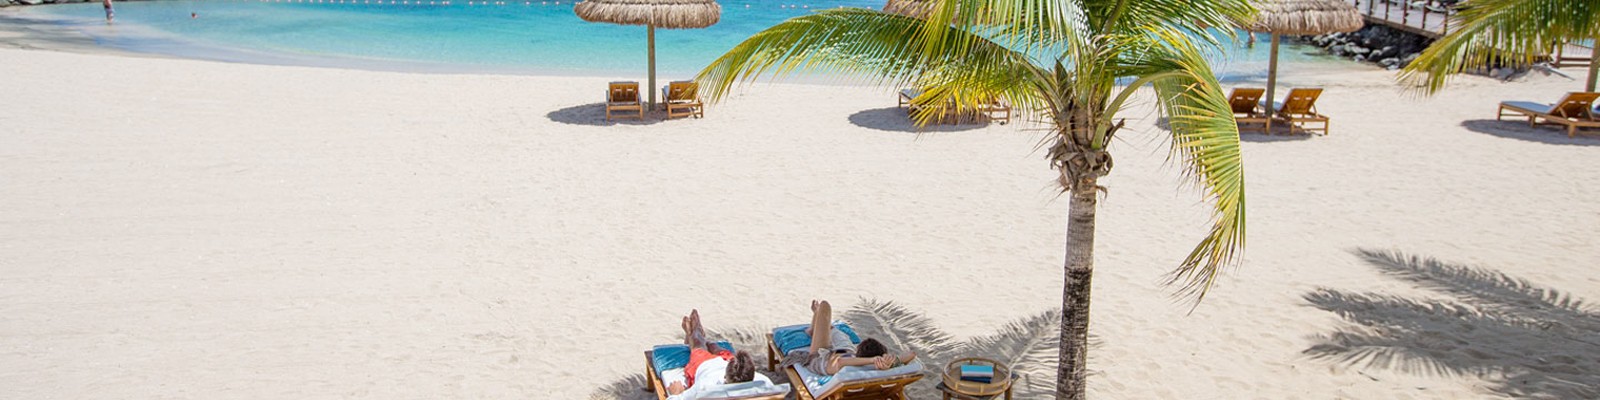 Grenada-luxury holidays header